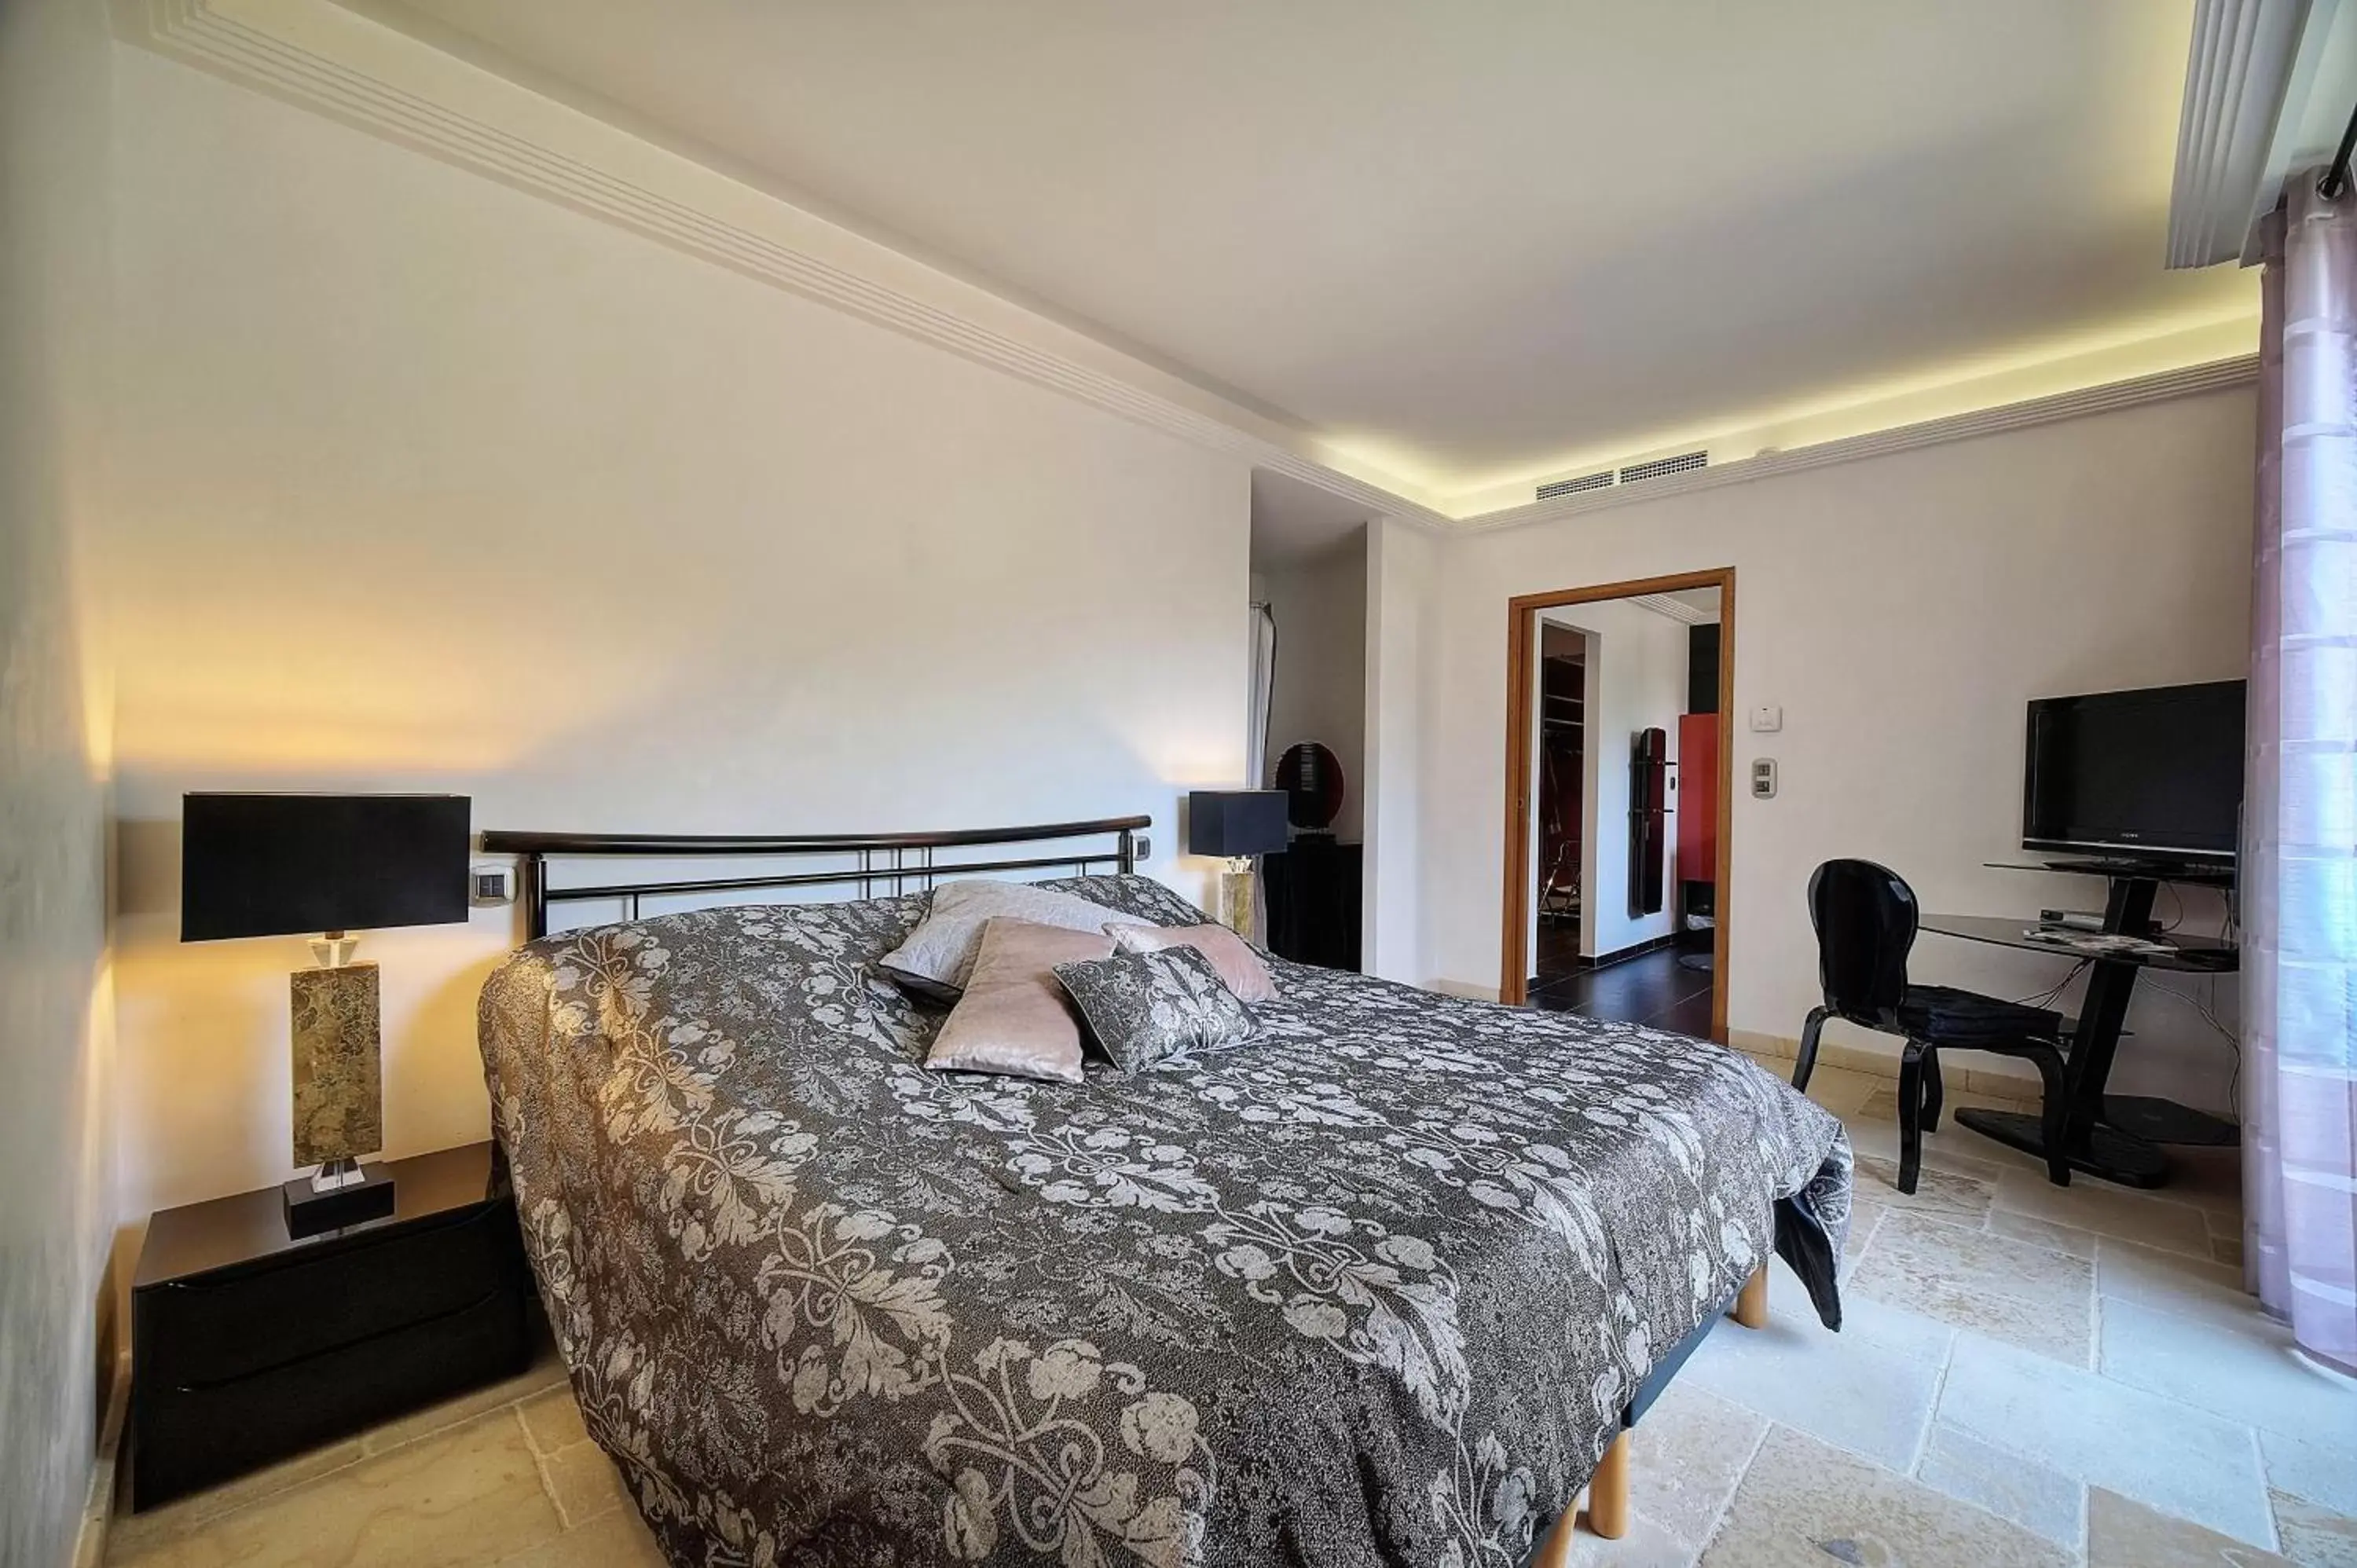 Bed in Chambre d'hôte "HAVRE DE PAIX" Prestige jacuzzi, hammam, sauna, PISCINE Mougins Cannes Grasse